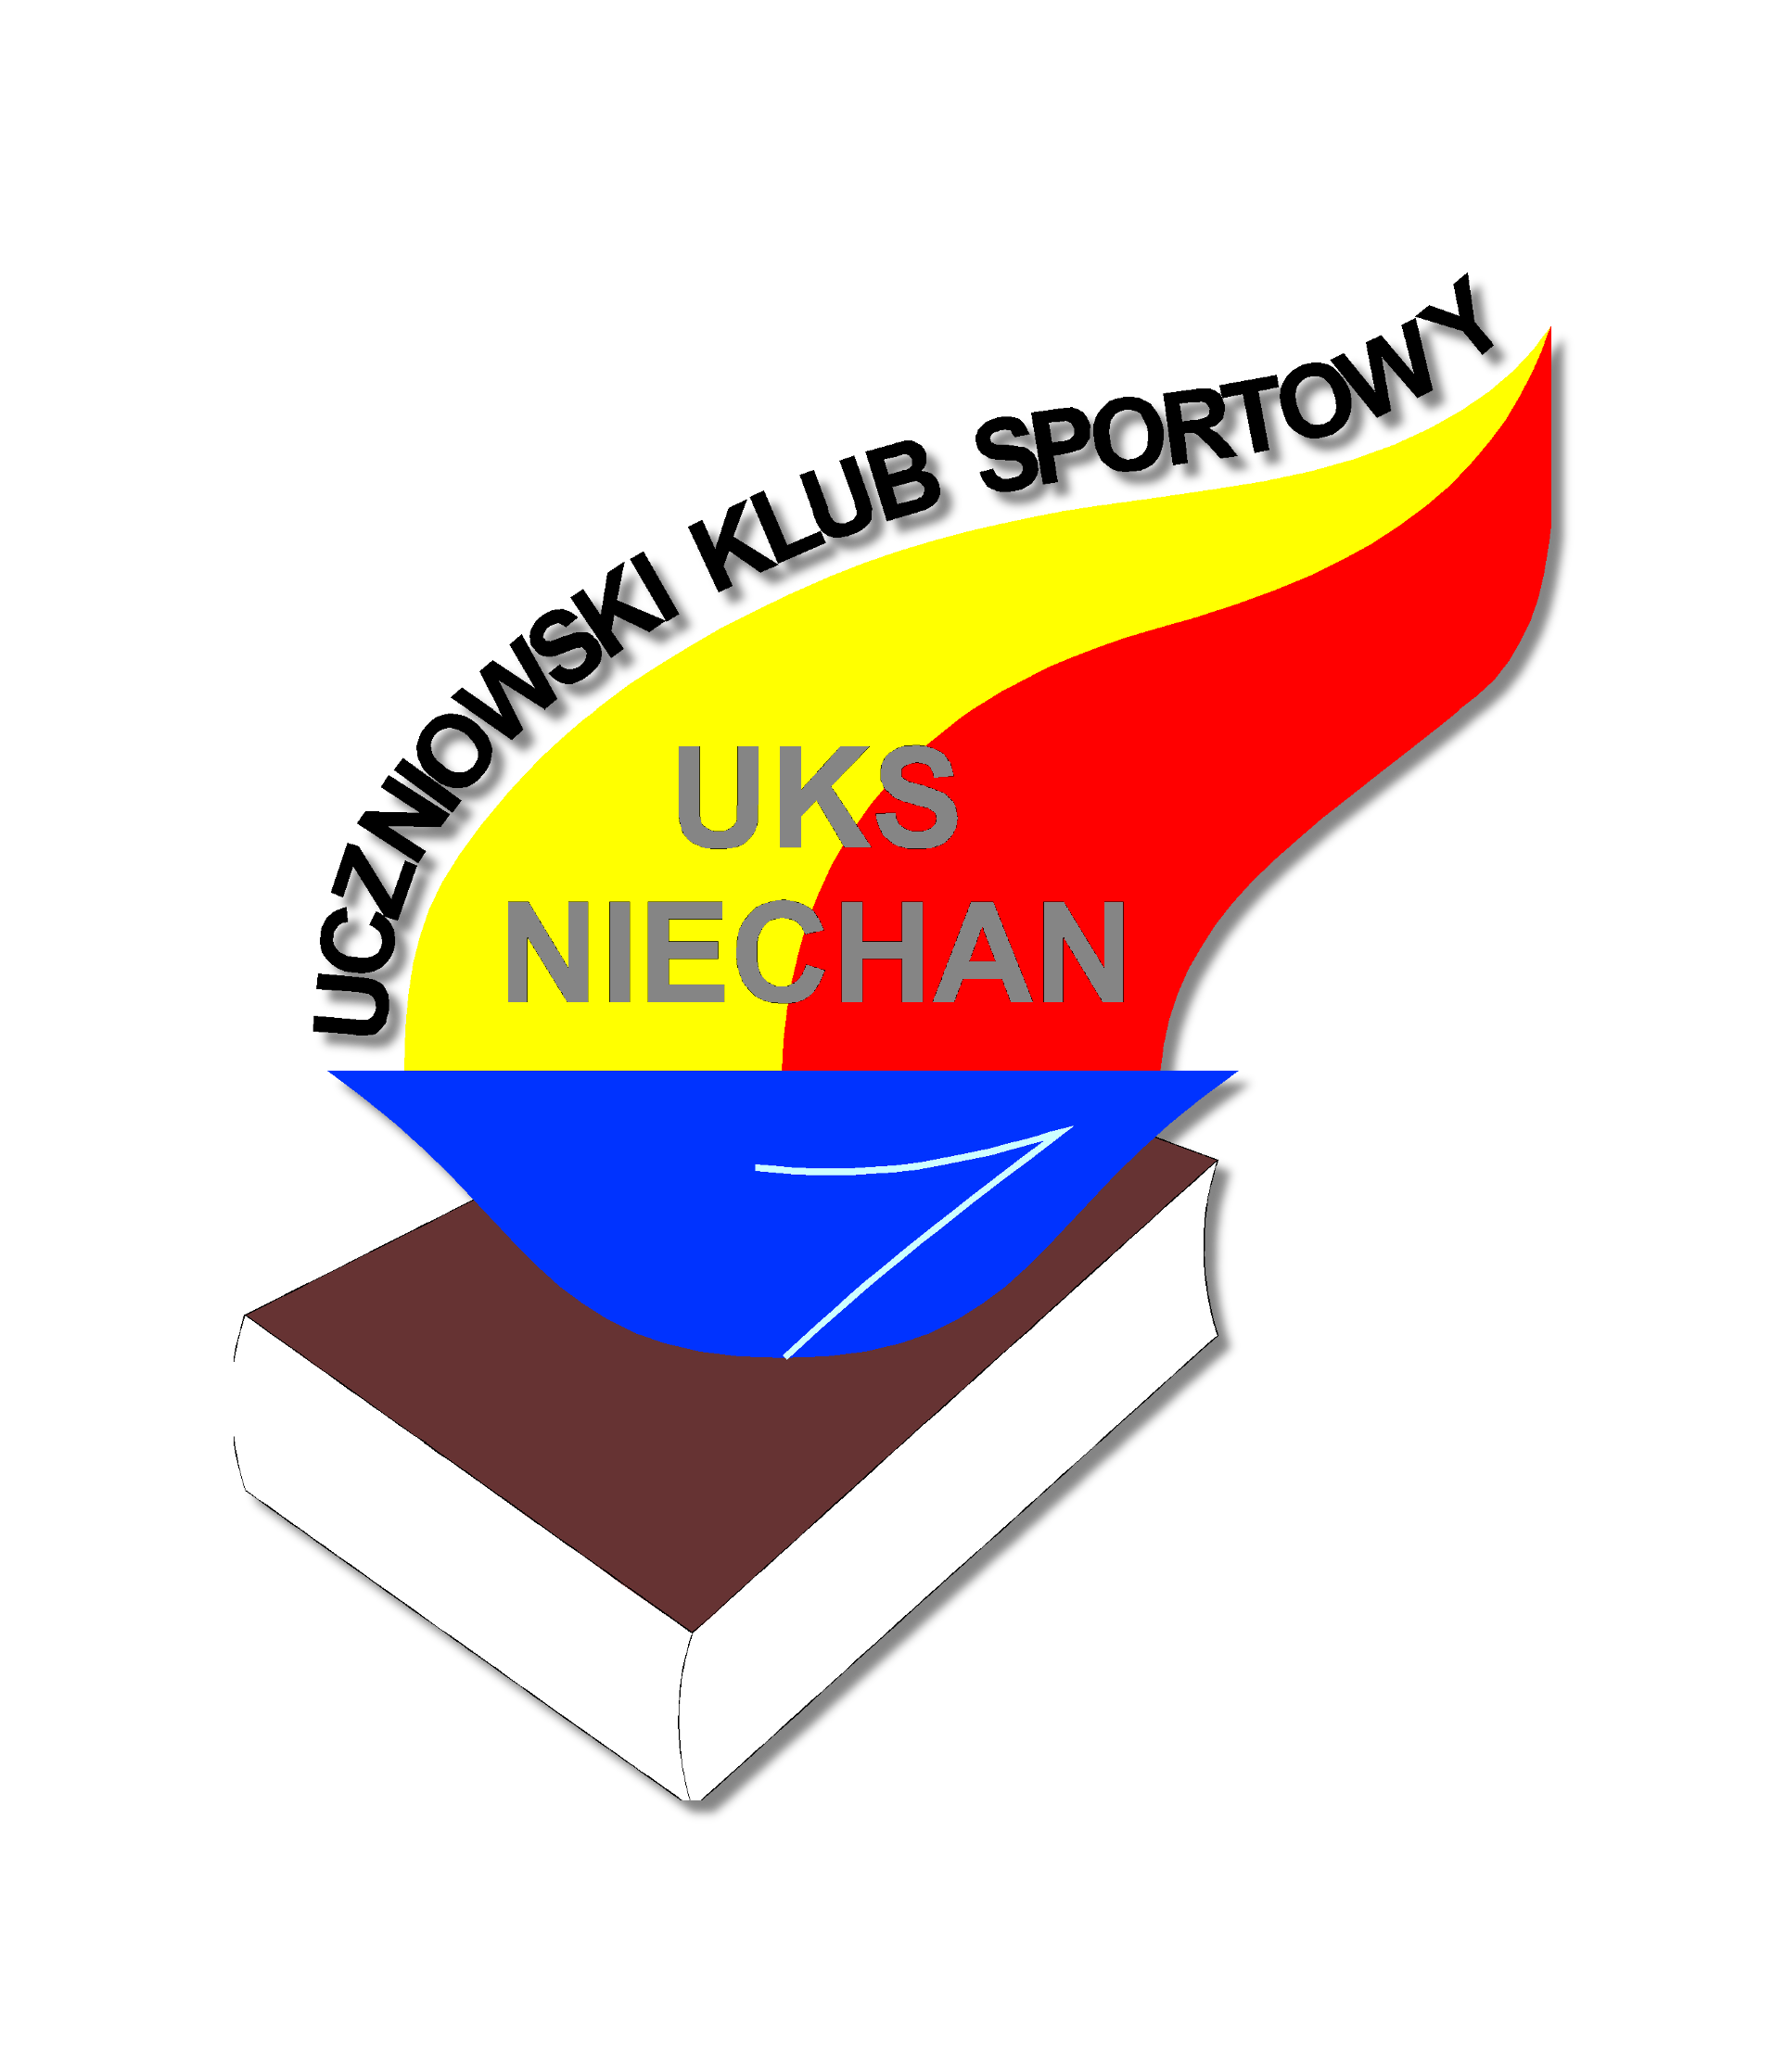 UKS-logo